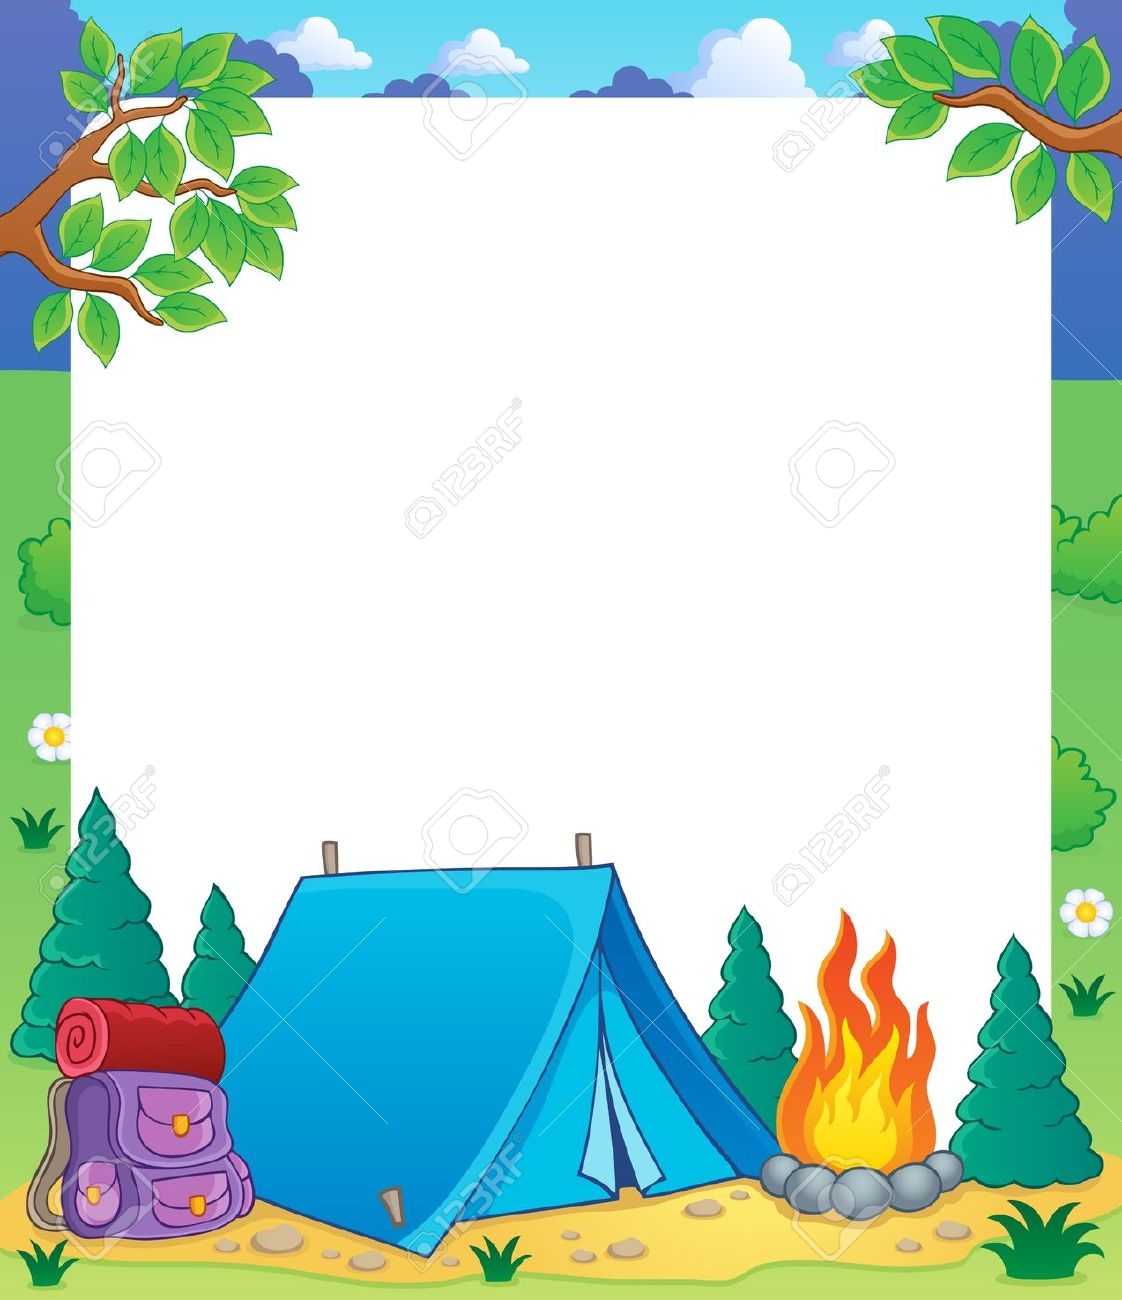 campfire clipart border